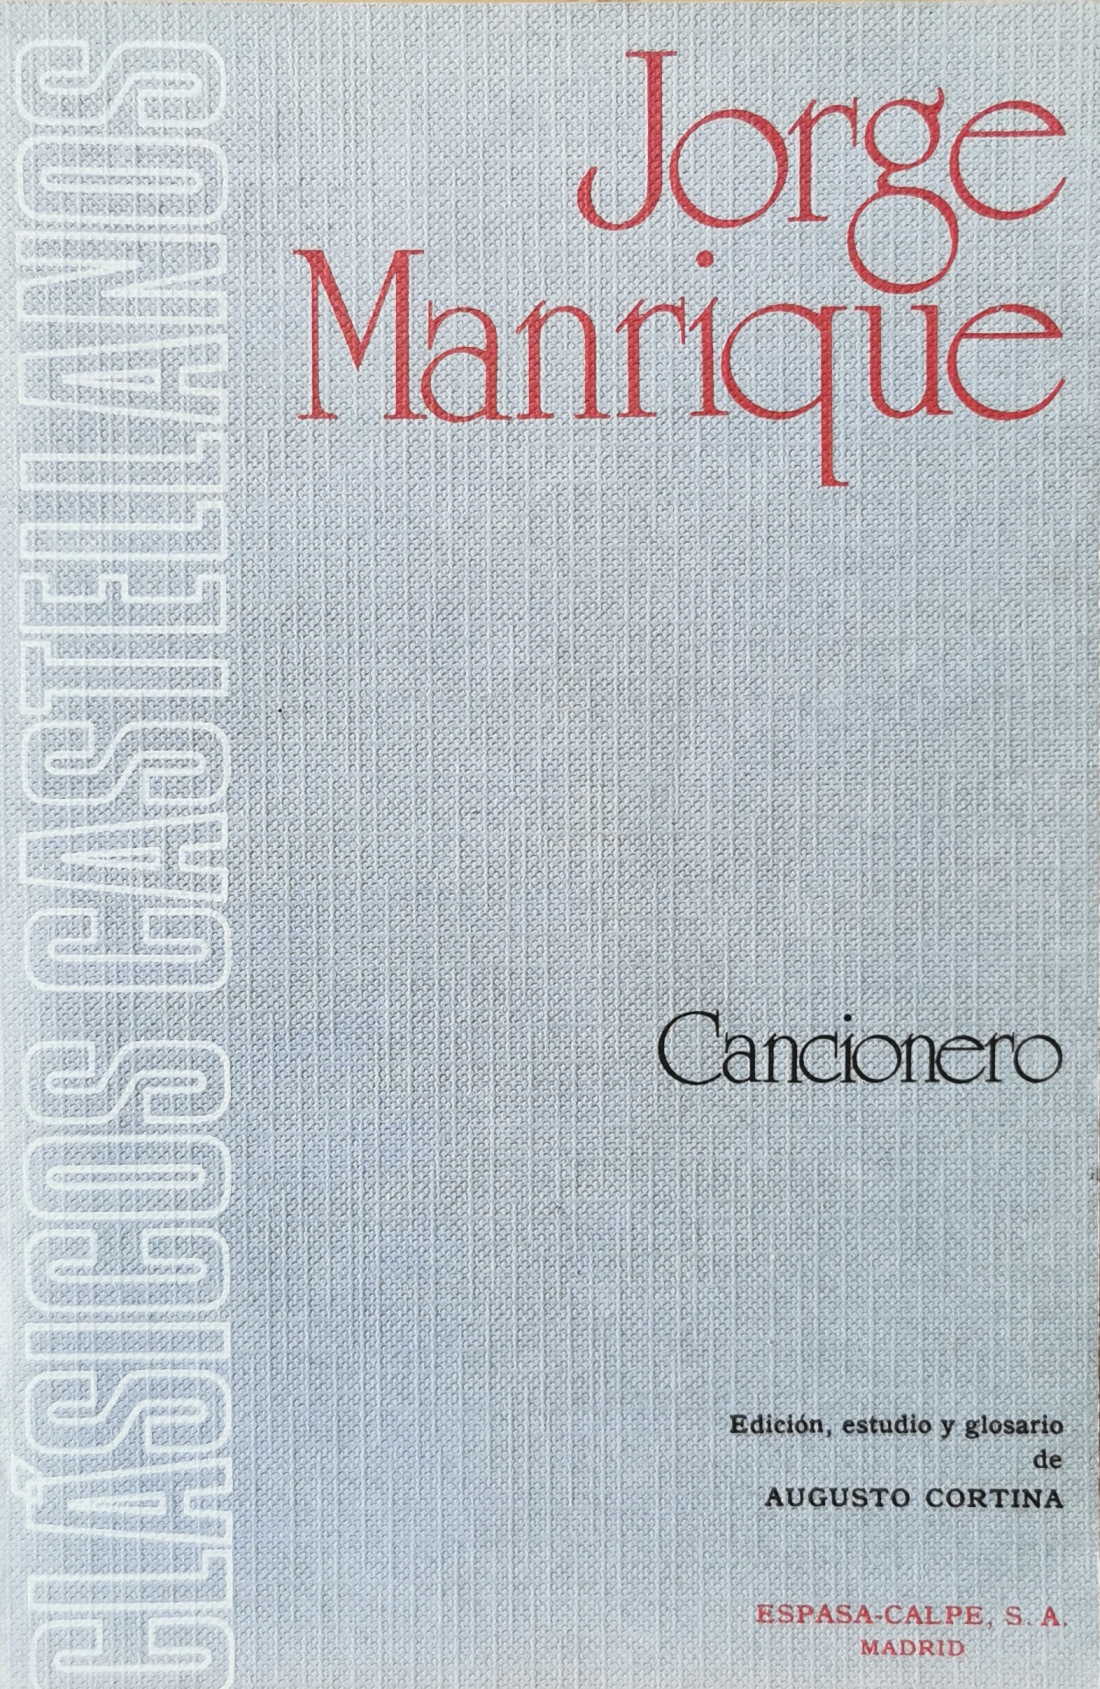 Jorge Manrique, Cancionero